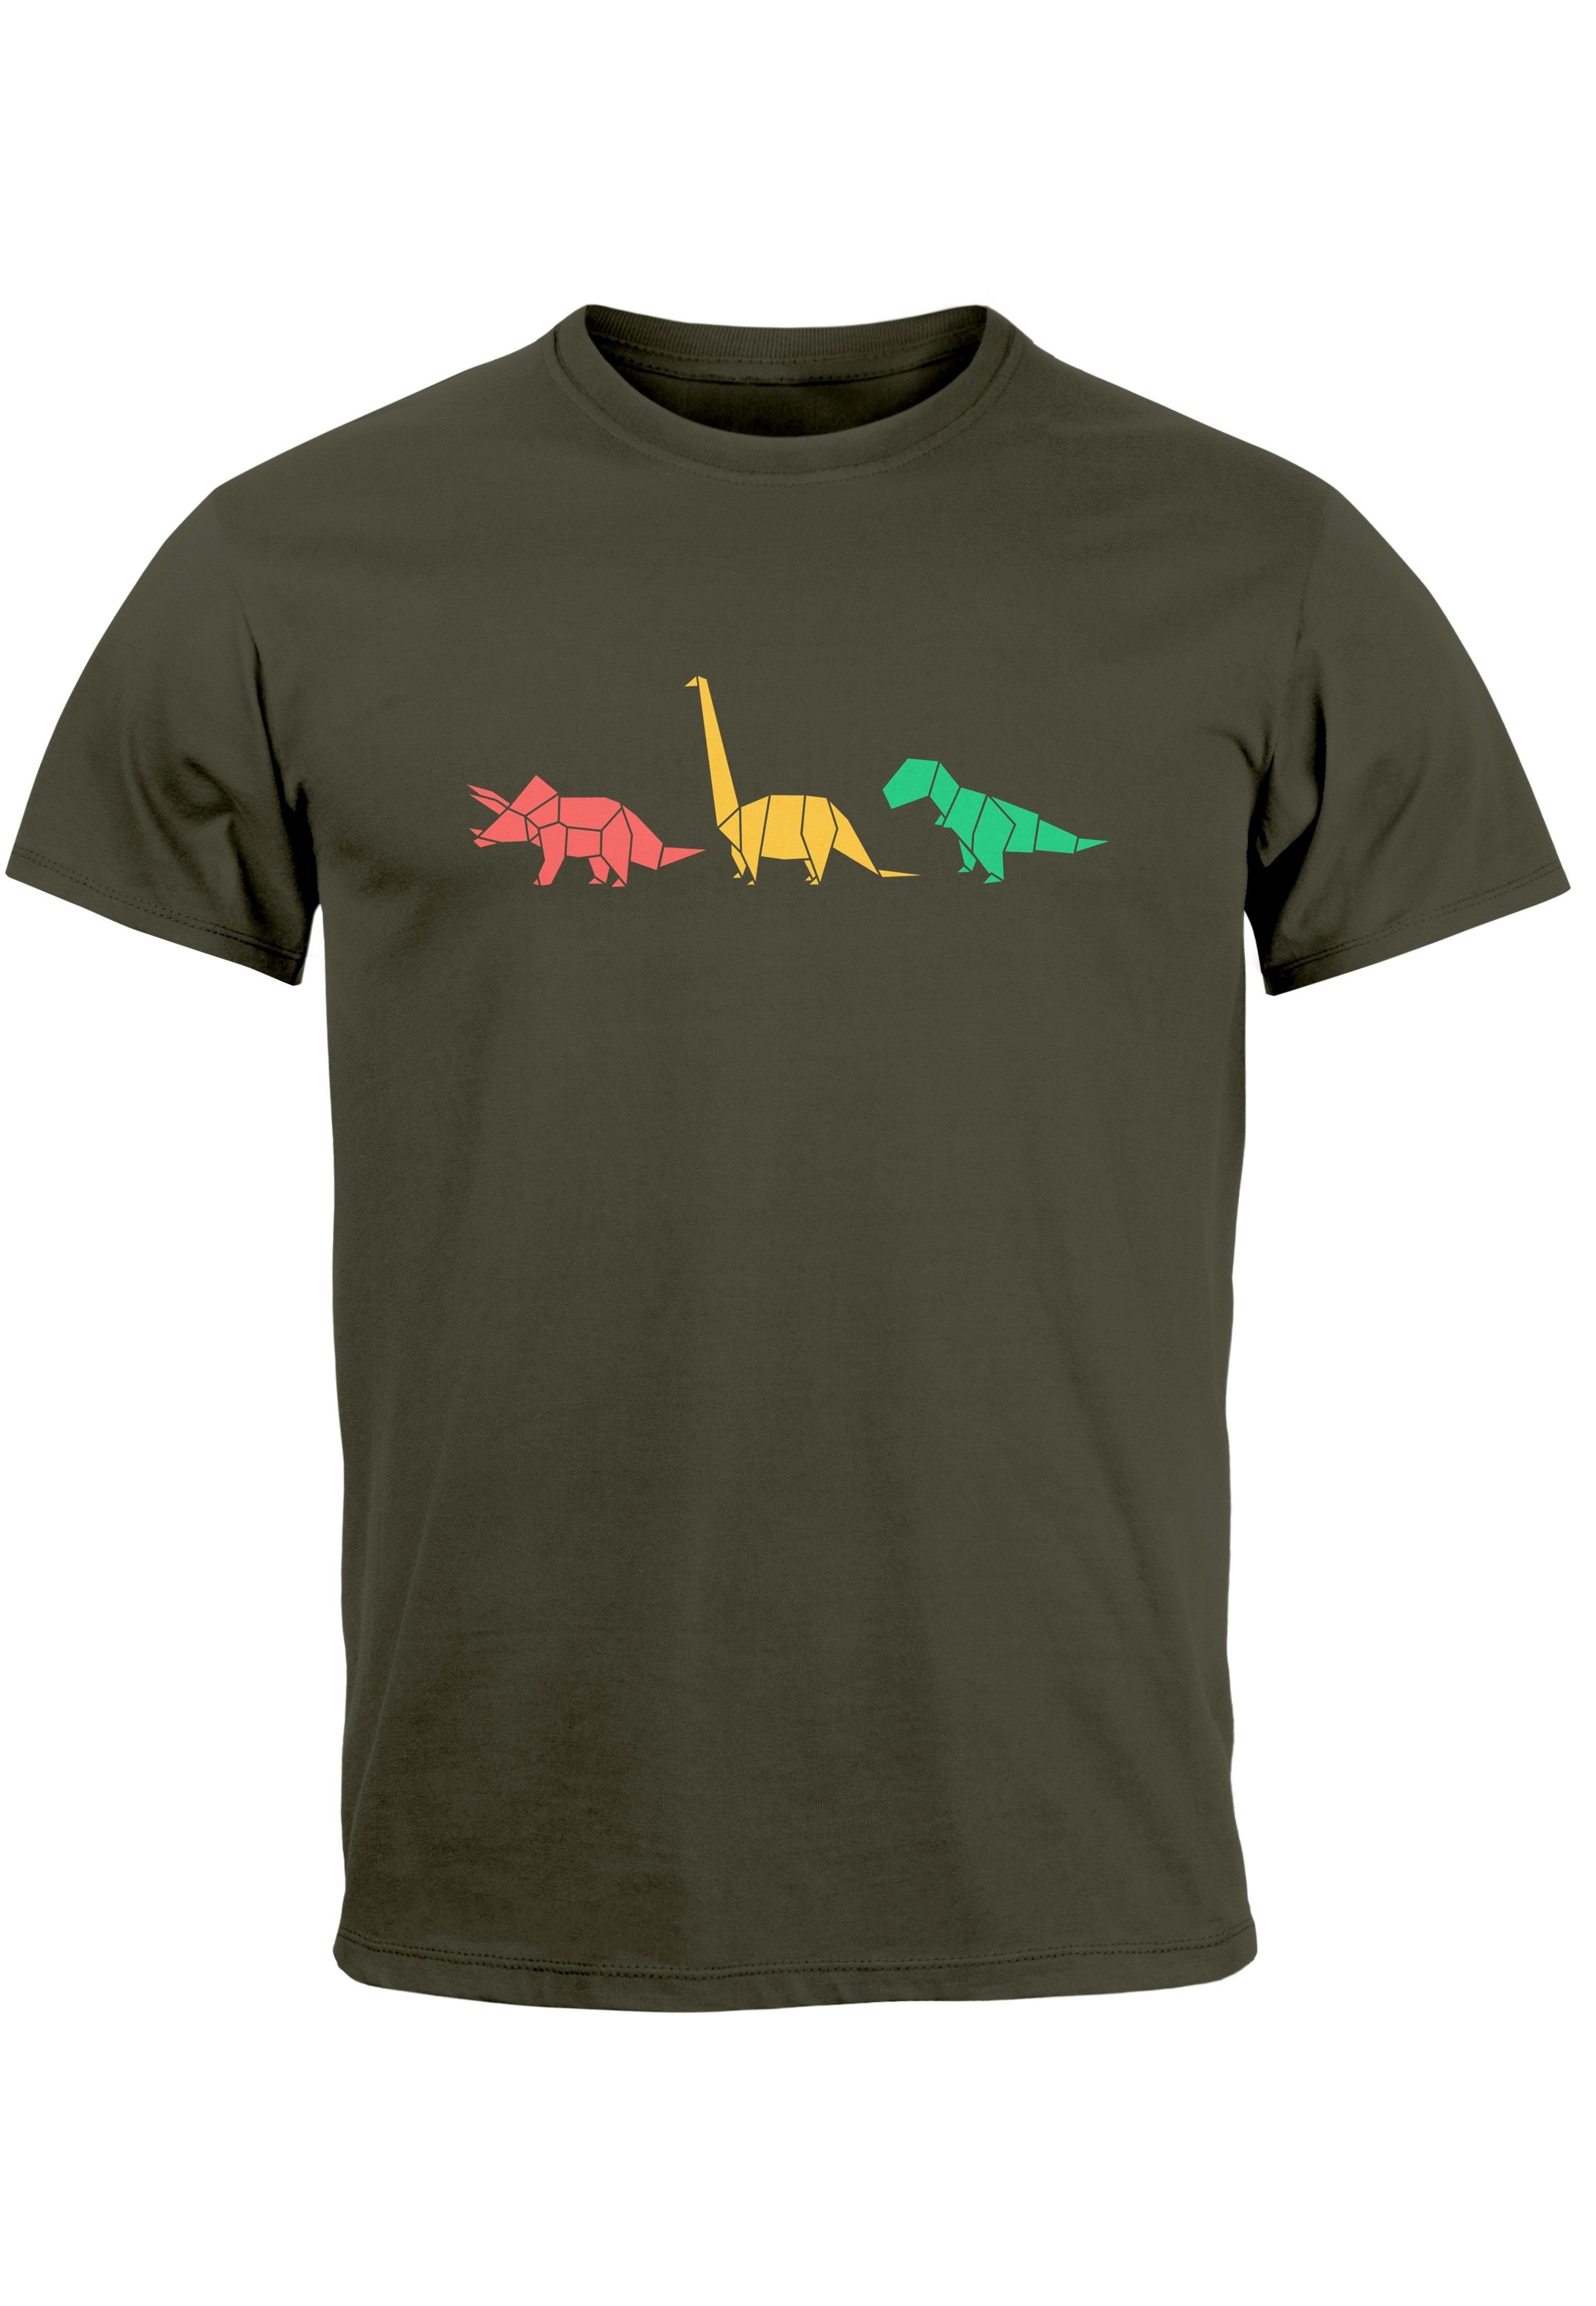 Print T-Shirt Print Herren army Fash Neverless mit Tiere Dinosaurier Geometric Print-Shirt Aufdruck Polygon